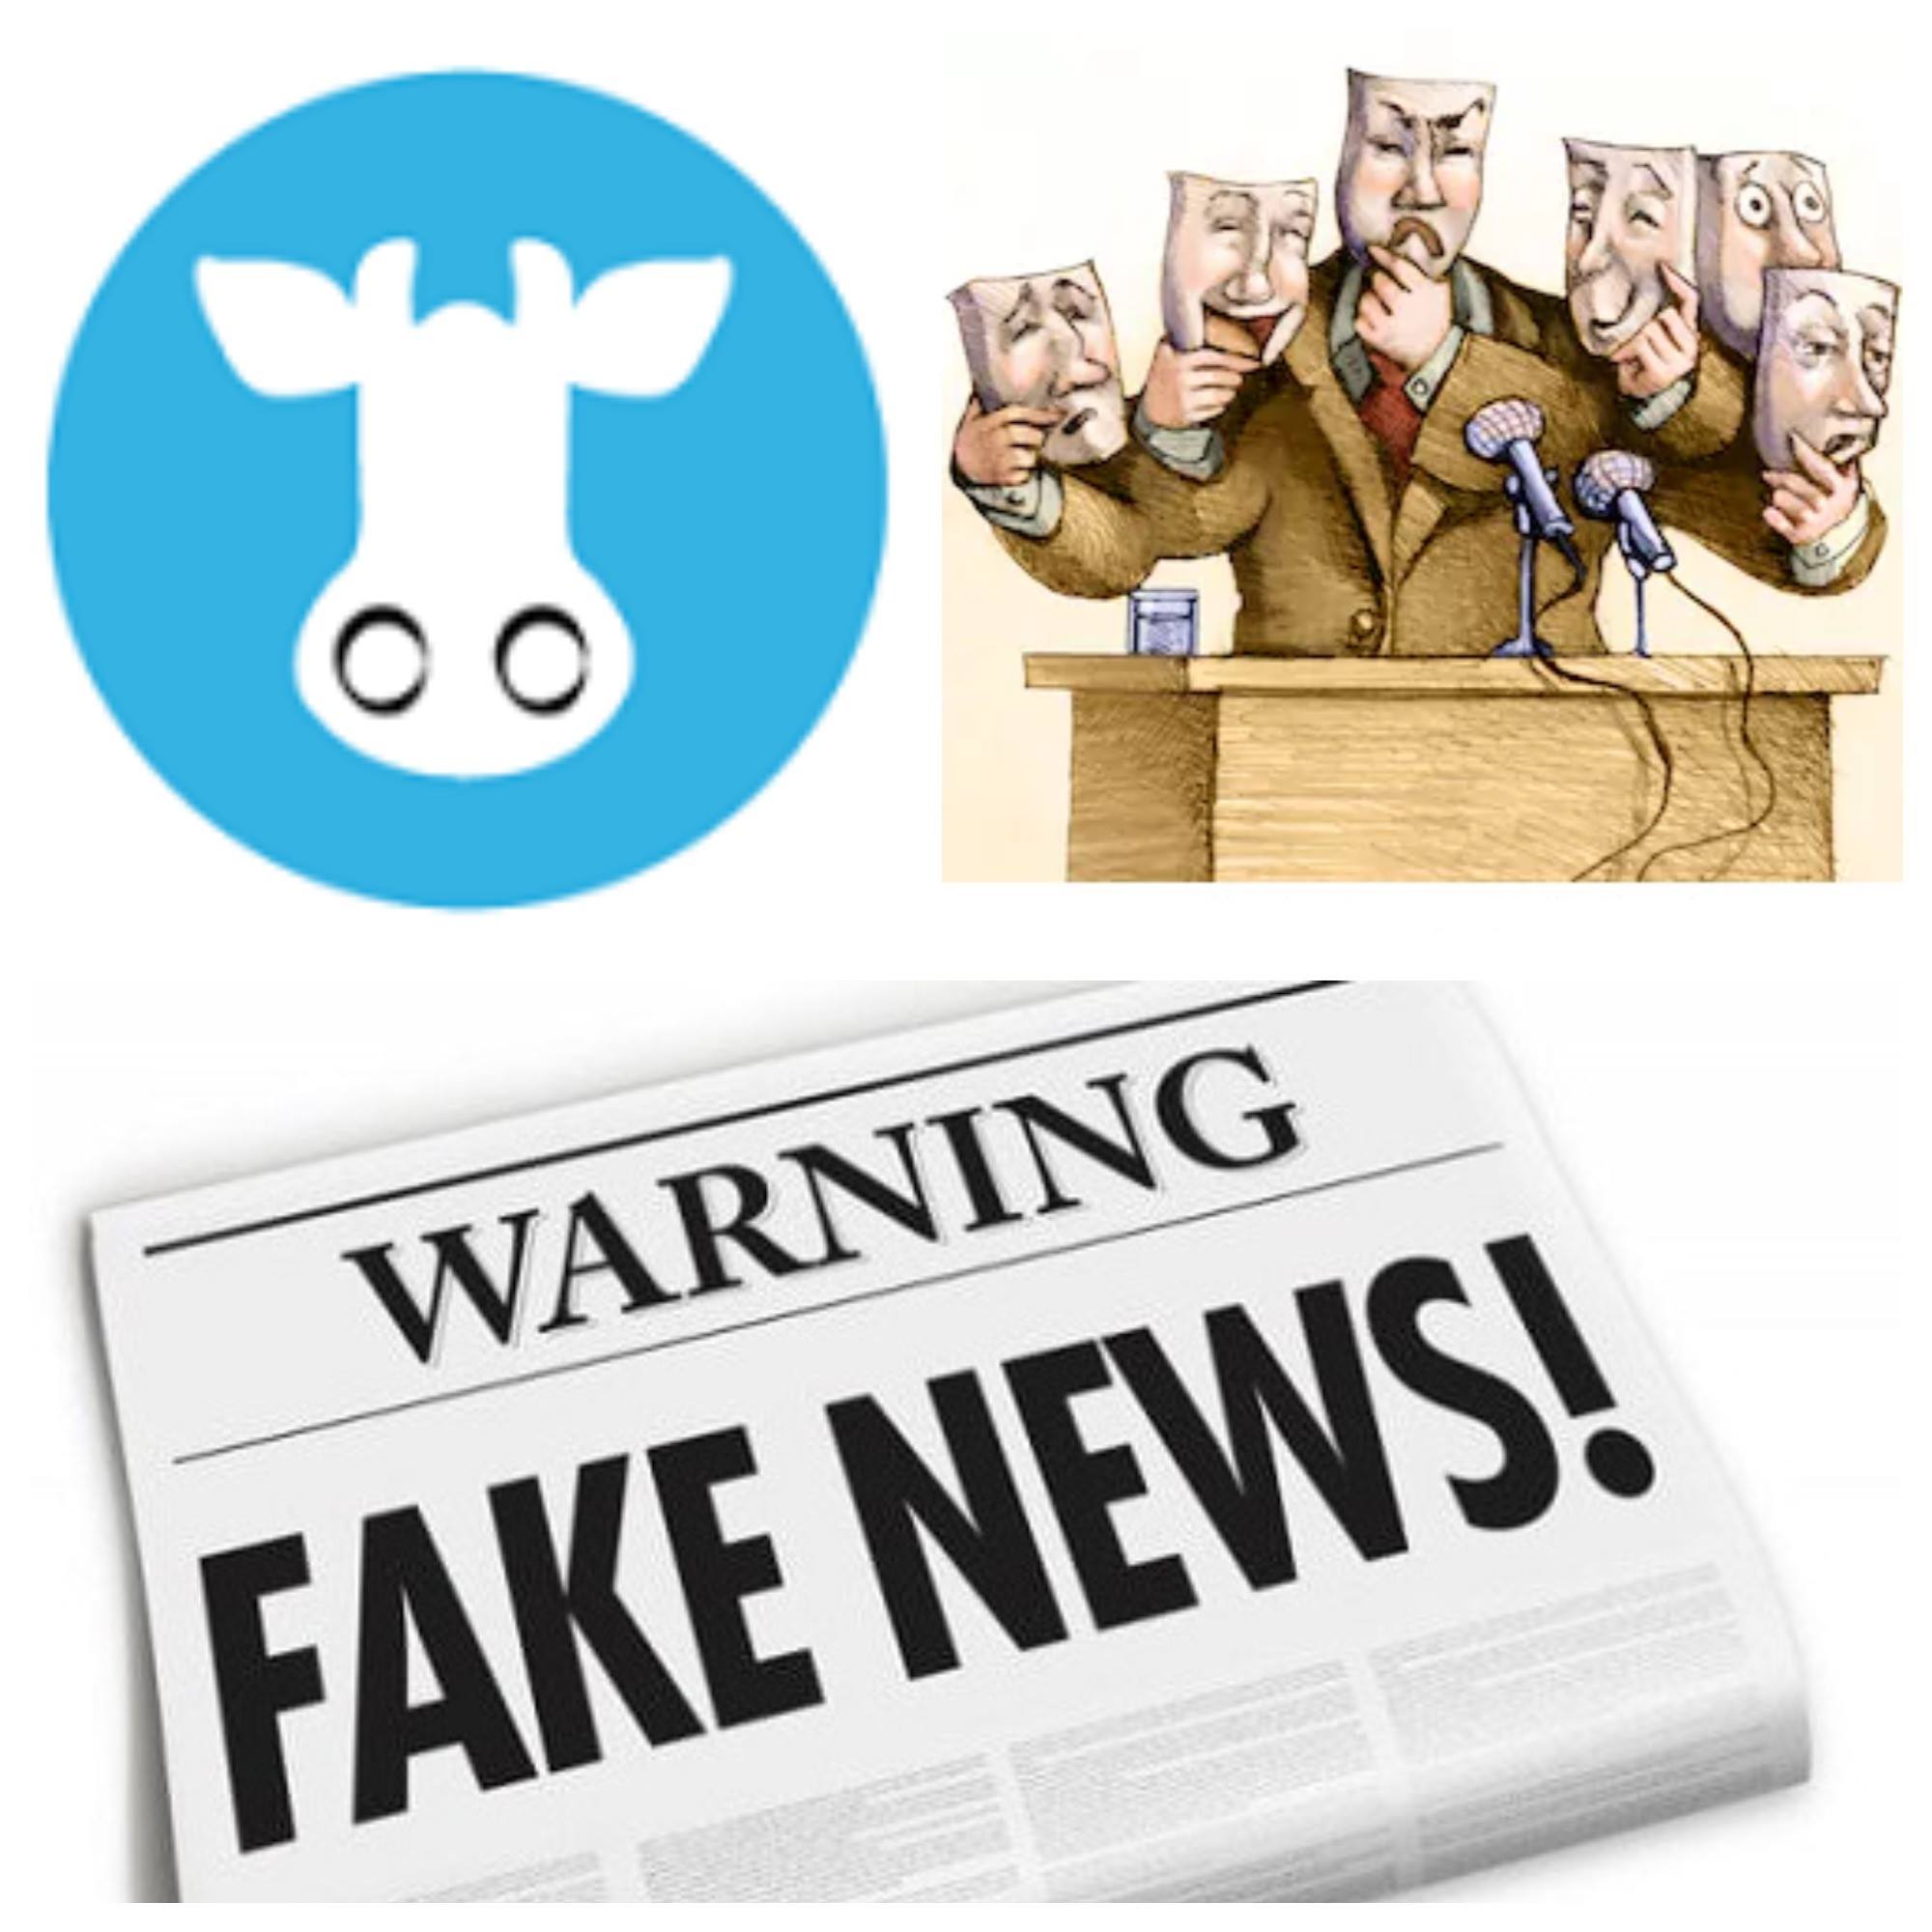 fake news